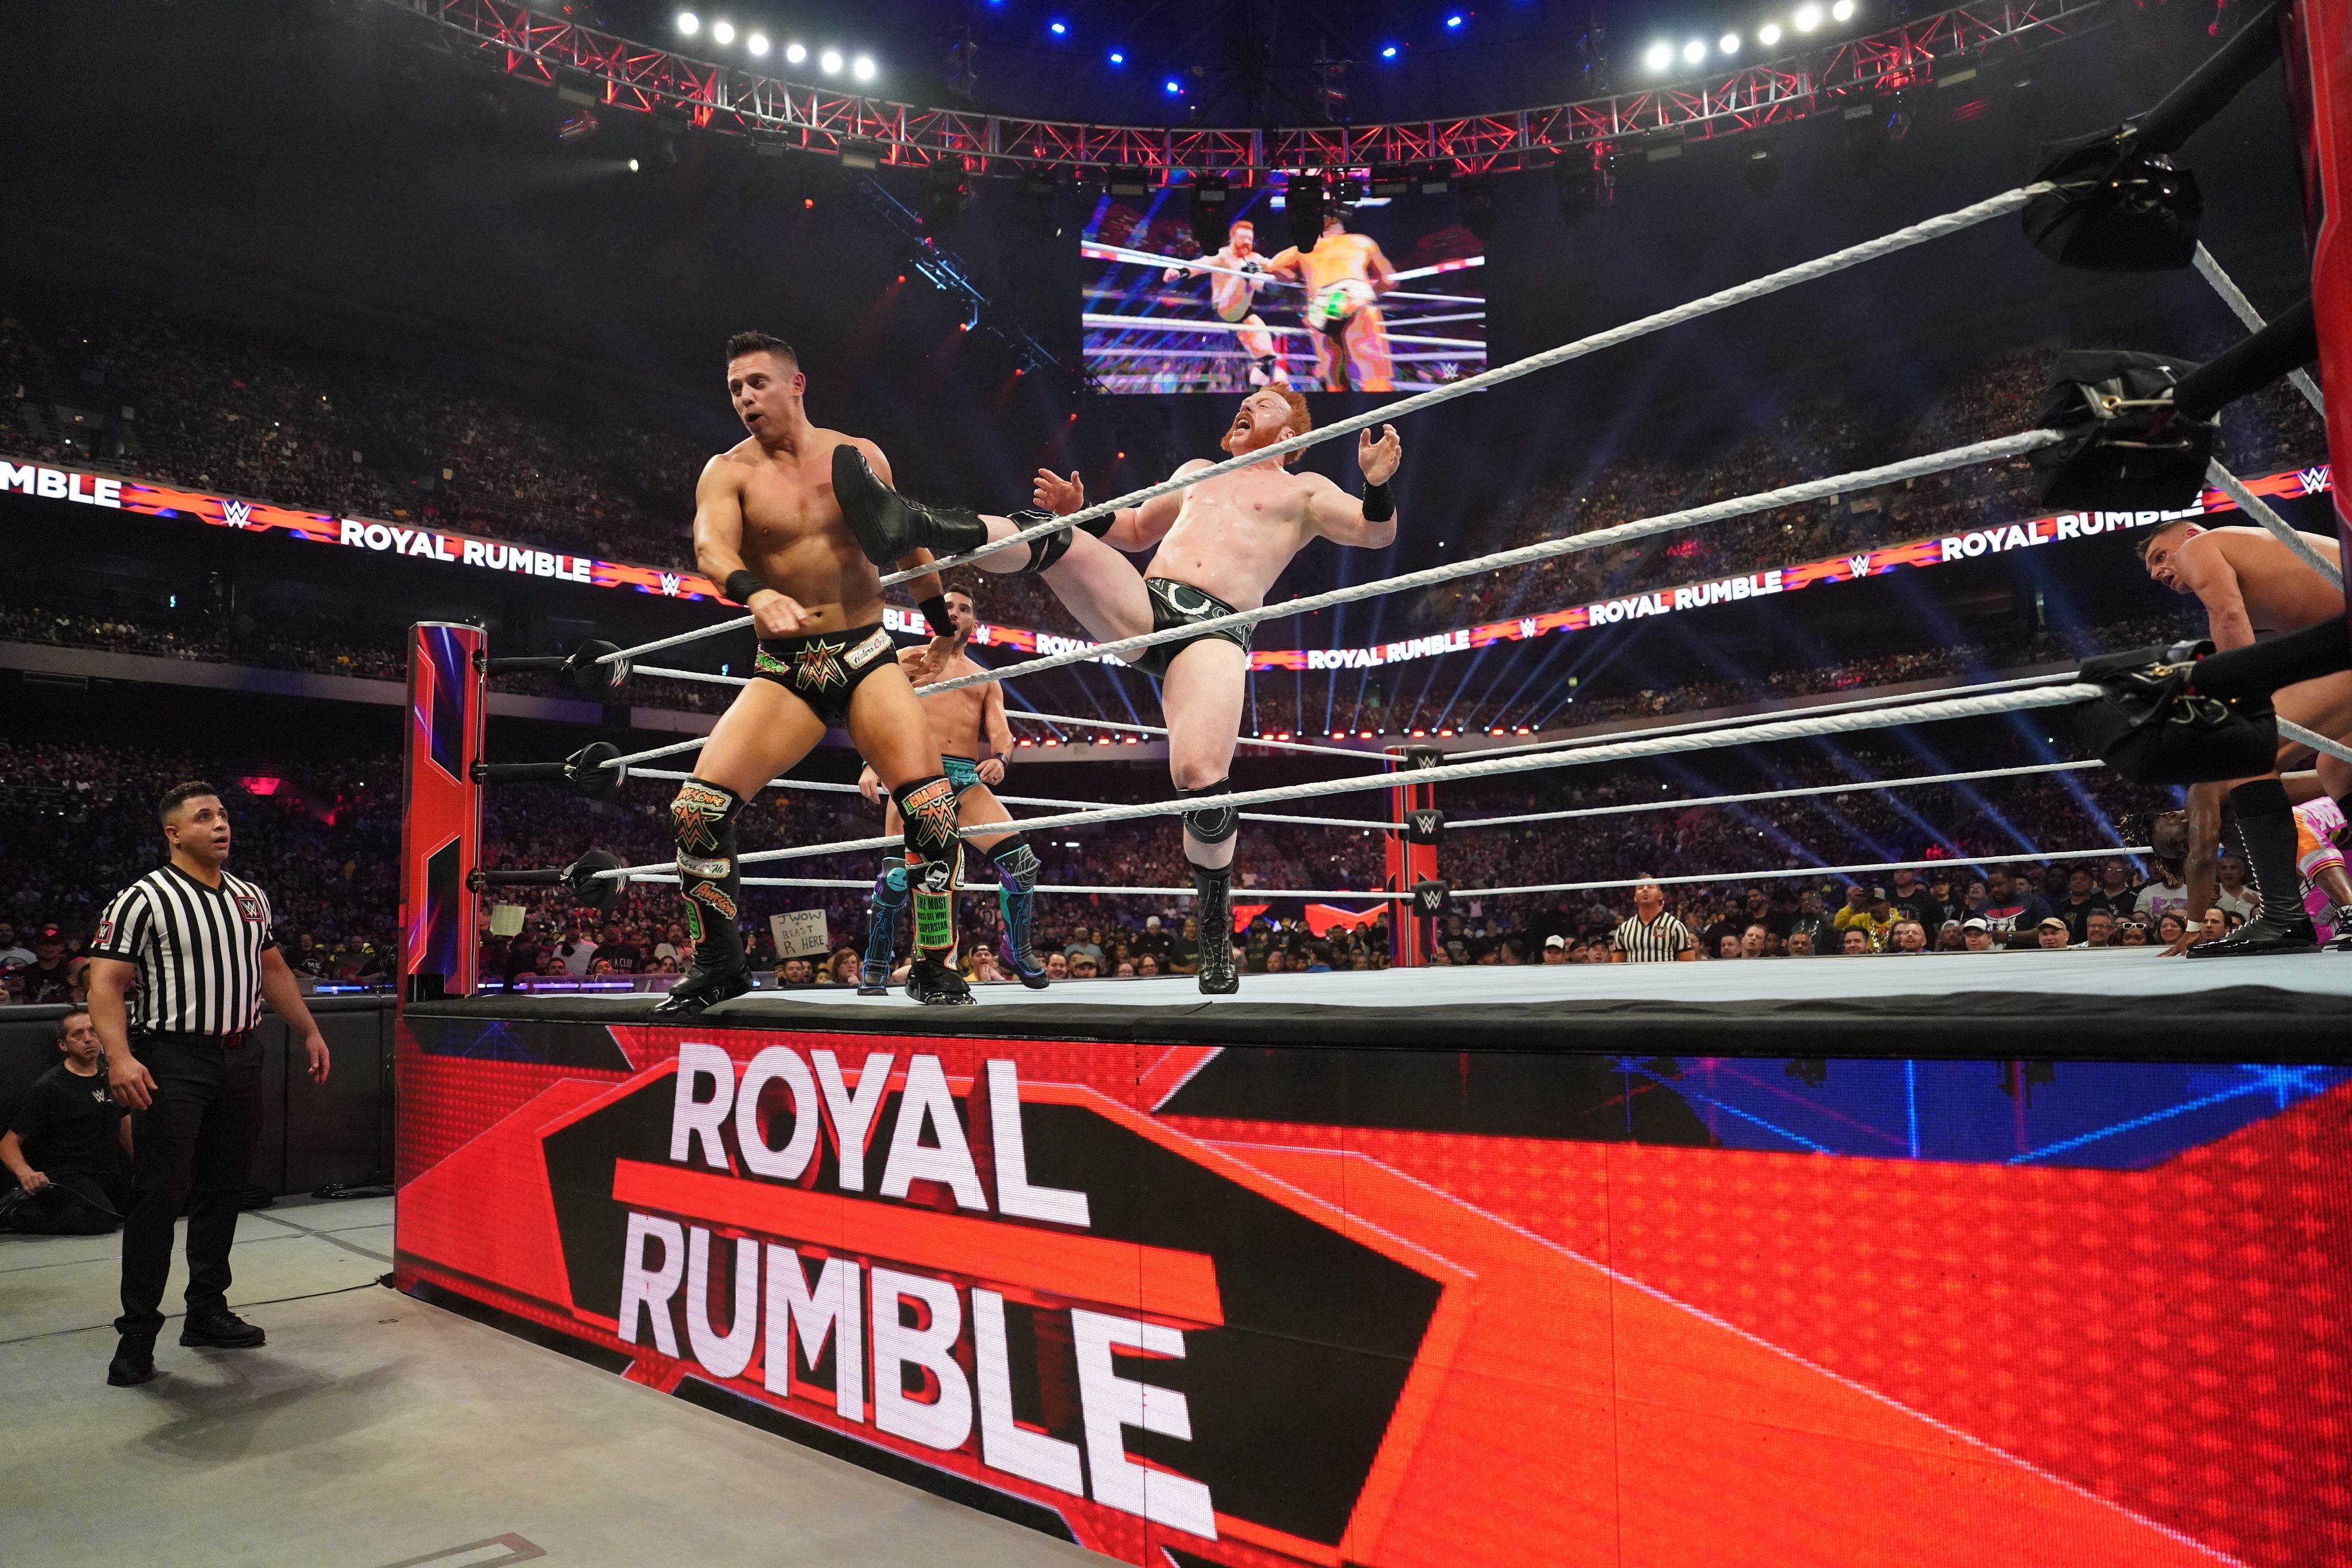 Becky Lynch still mortified by 'shameful' WWE debut